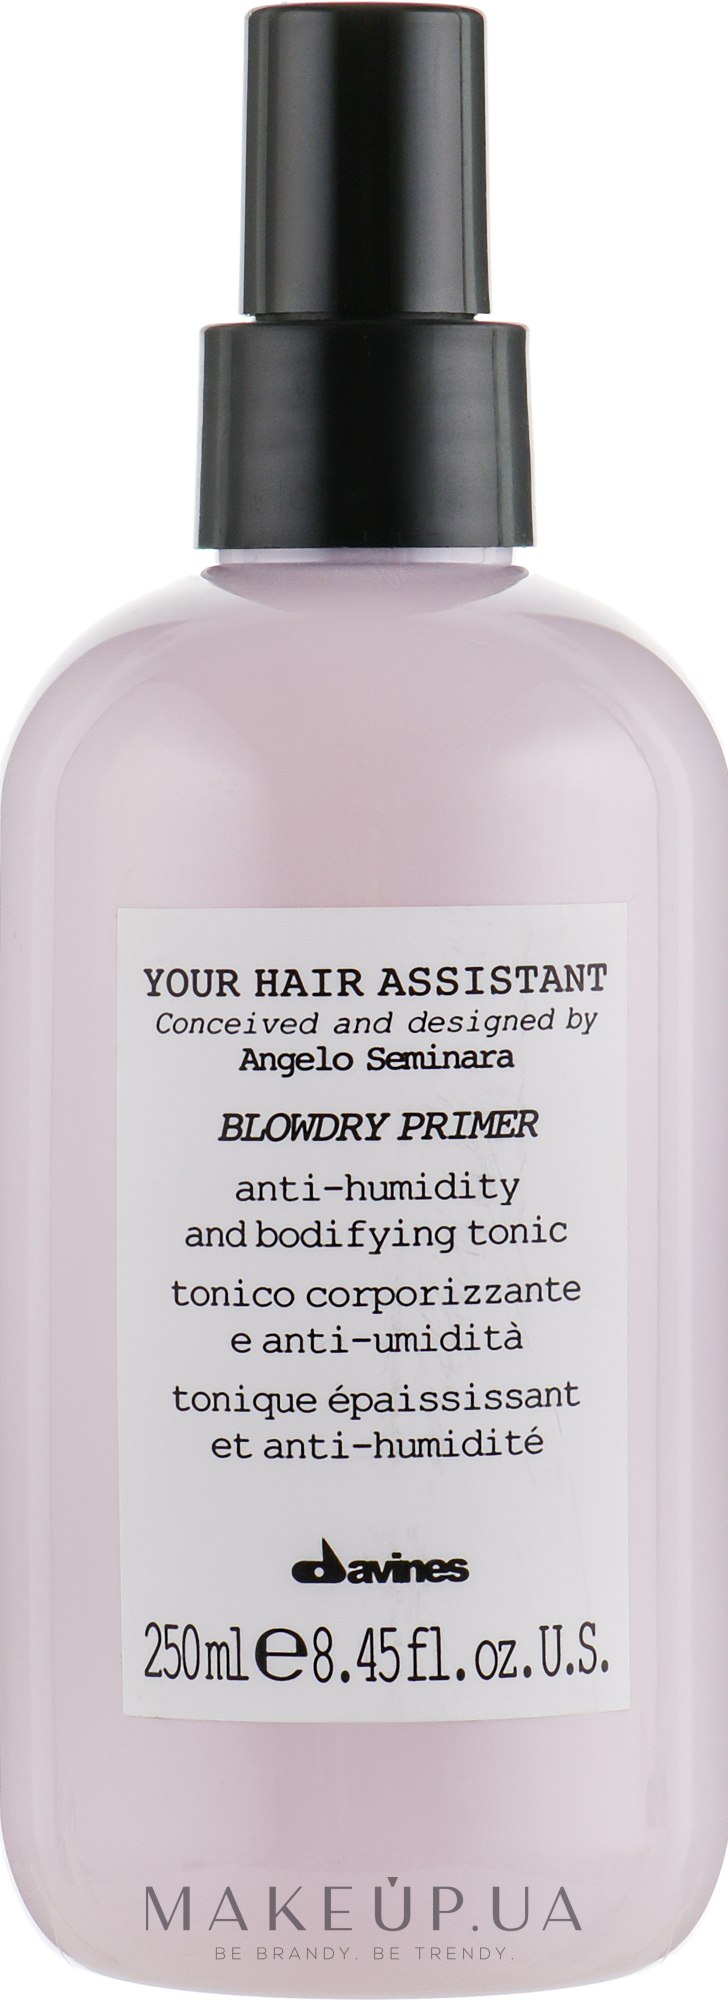 Спрей-праймер для укладки волосся - Davines Your Hair Assistant Blowdry Primer — фото 250ml